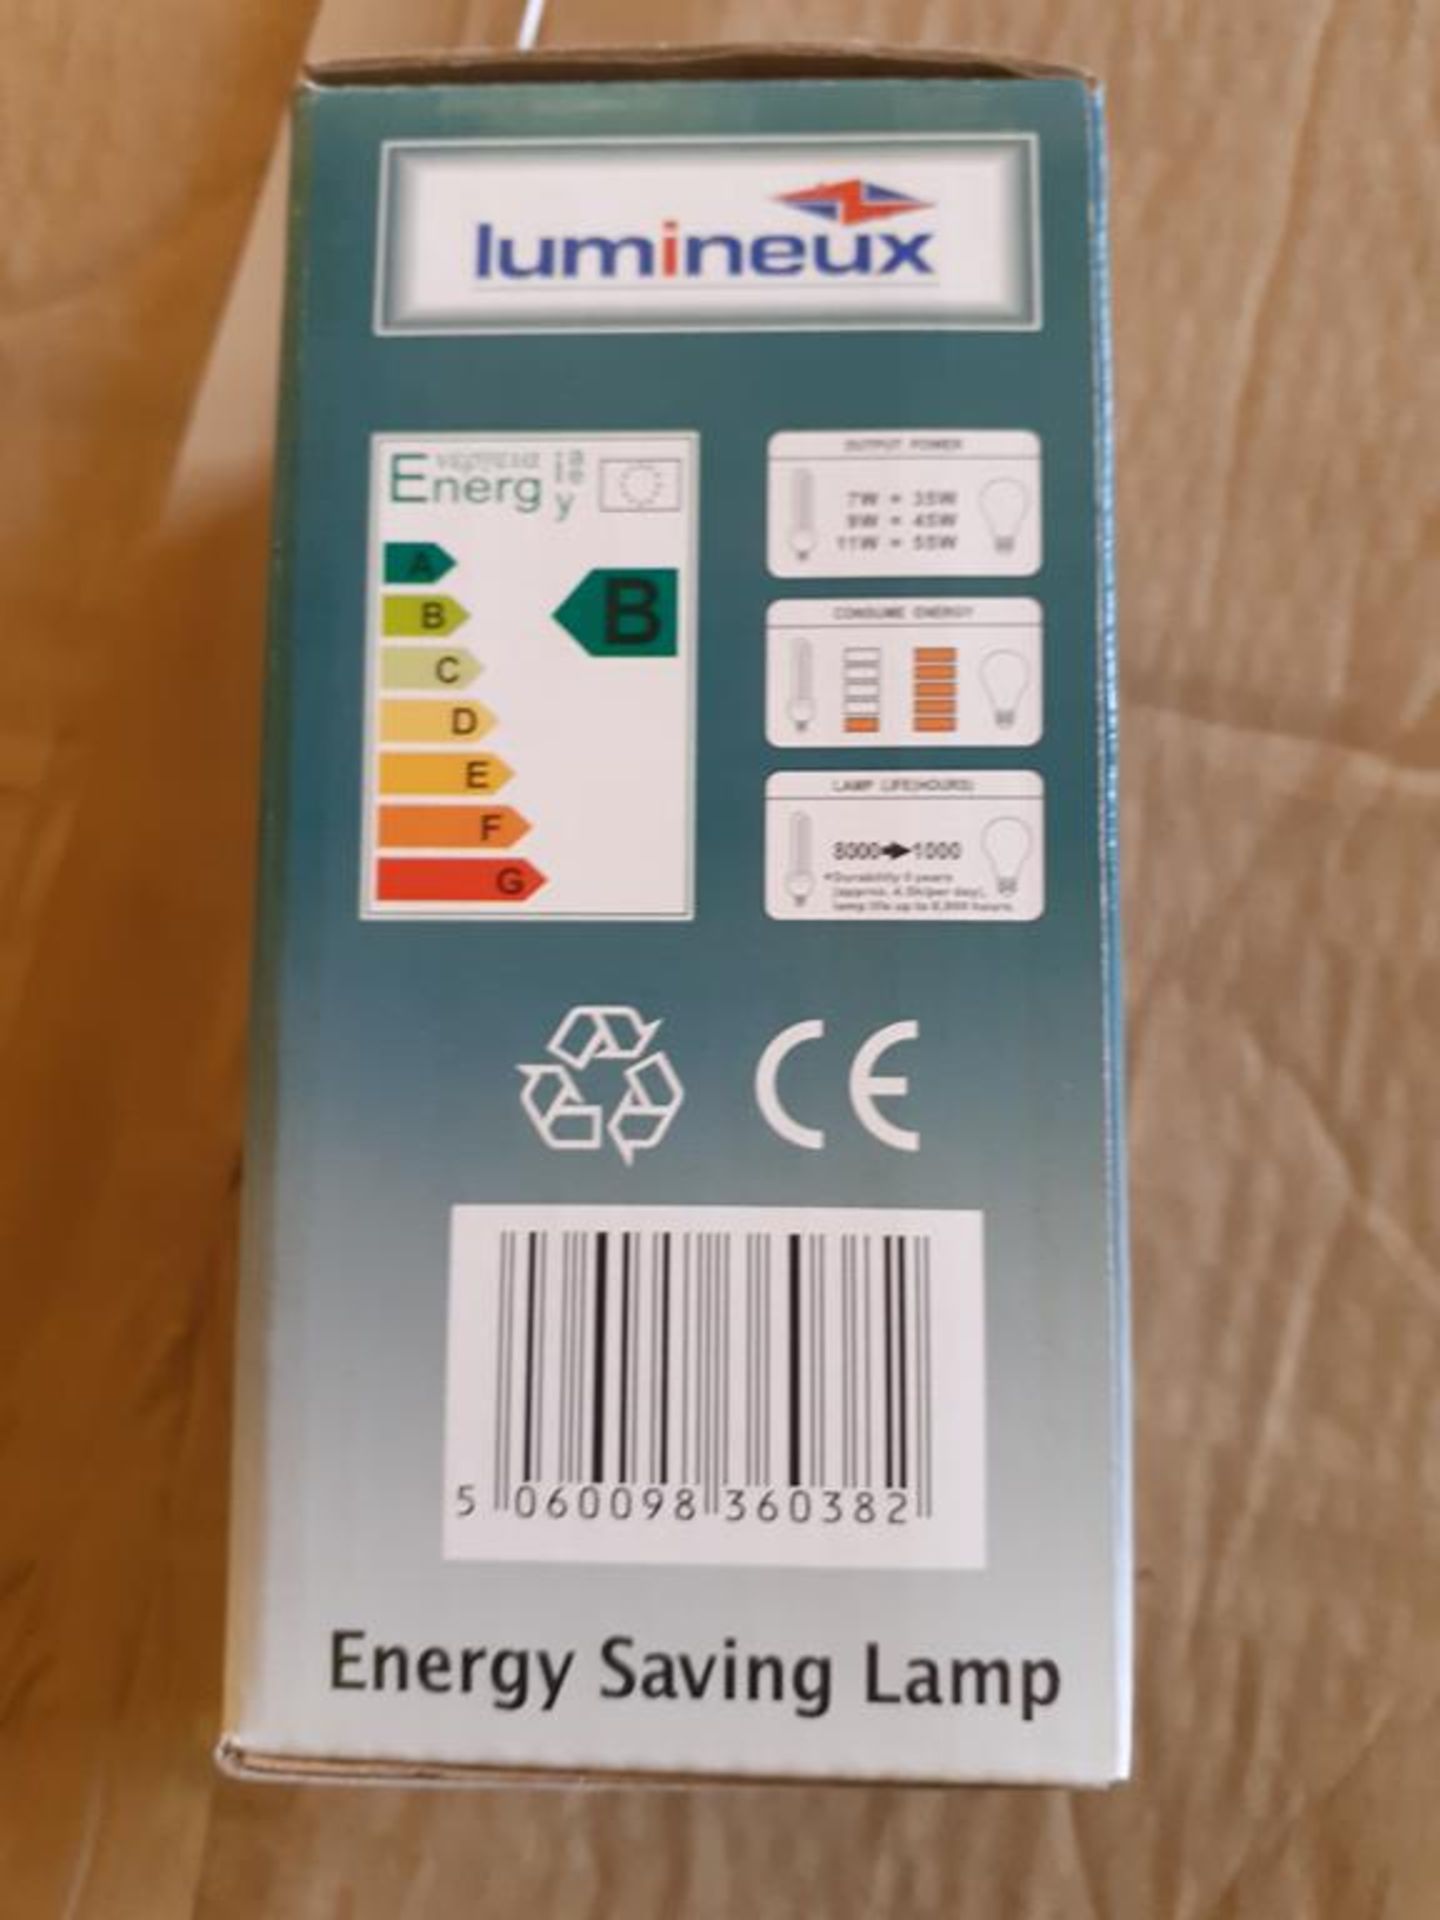 6x boxes of Lumineux Reflector 7W E14 2700K 220-240V Energy Saving Light Bulbs (40pcs per box) - Image 6 of 6